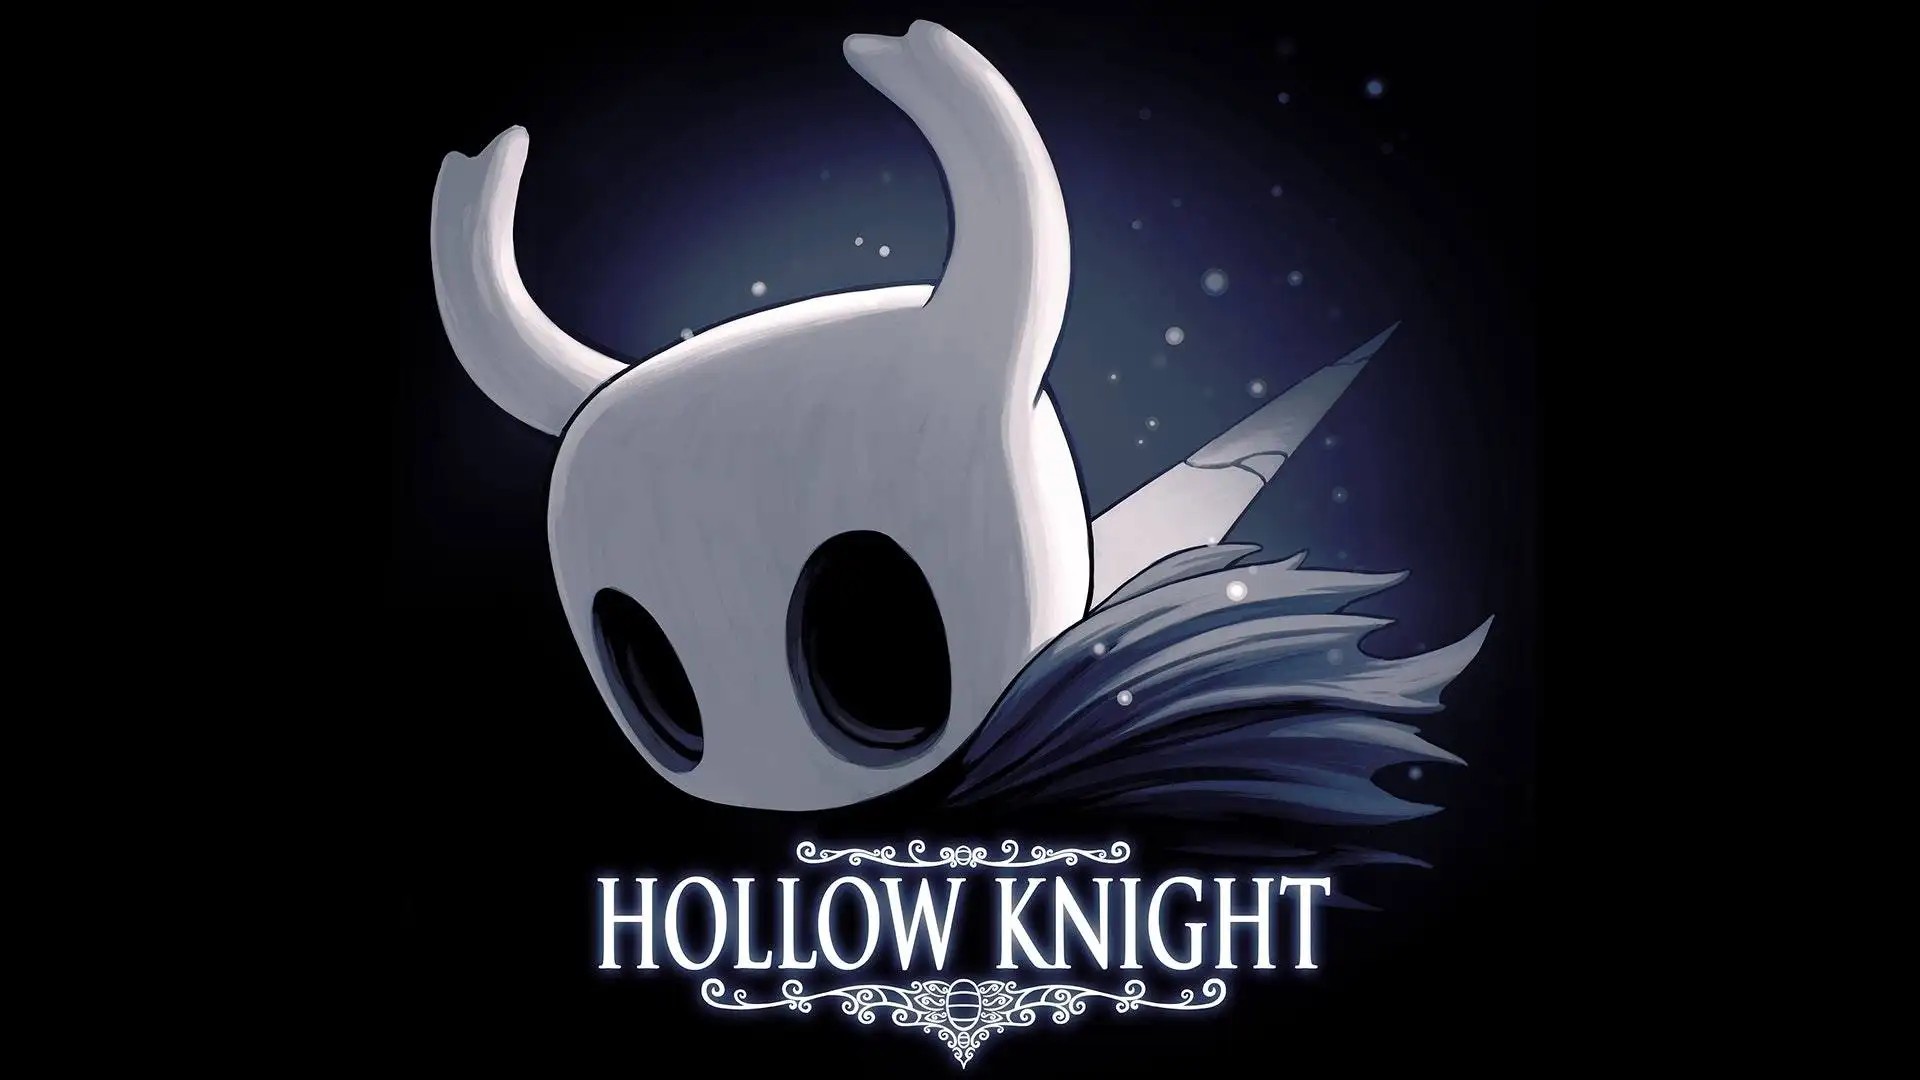 Hollow knight 5 knights